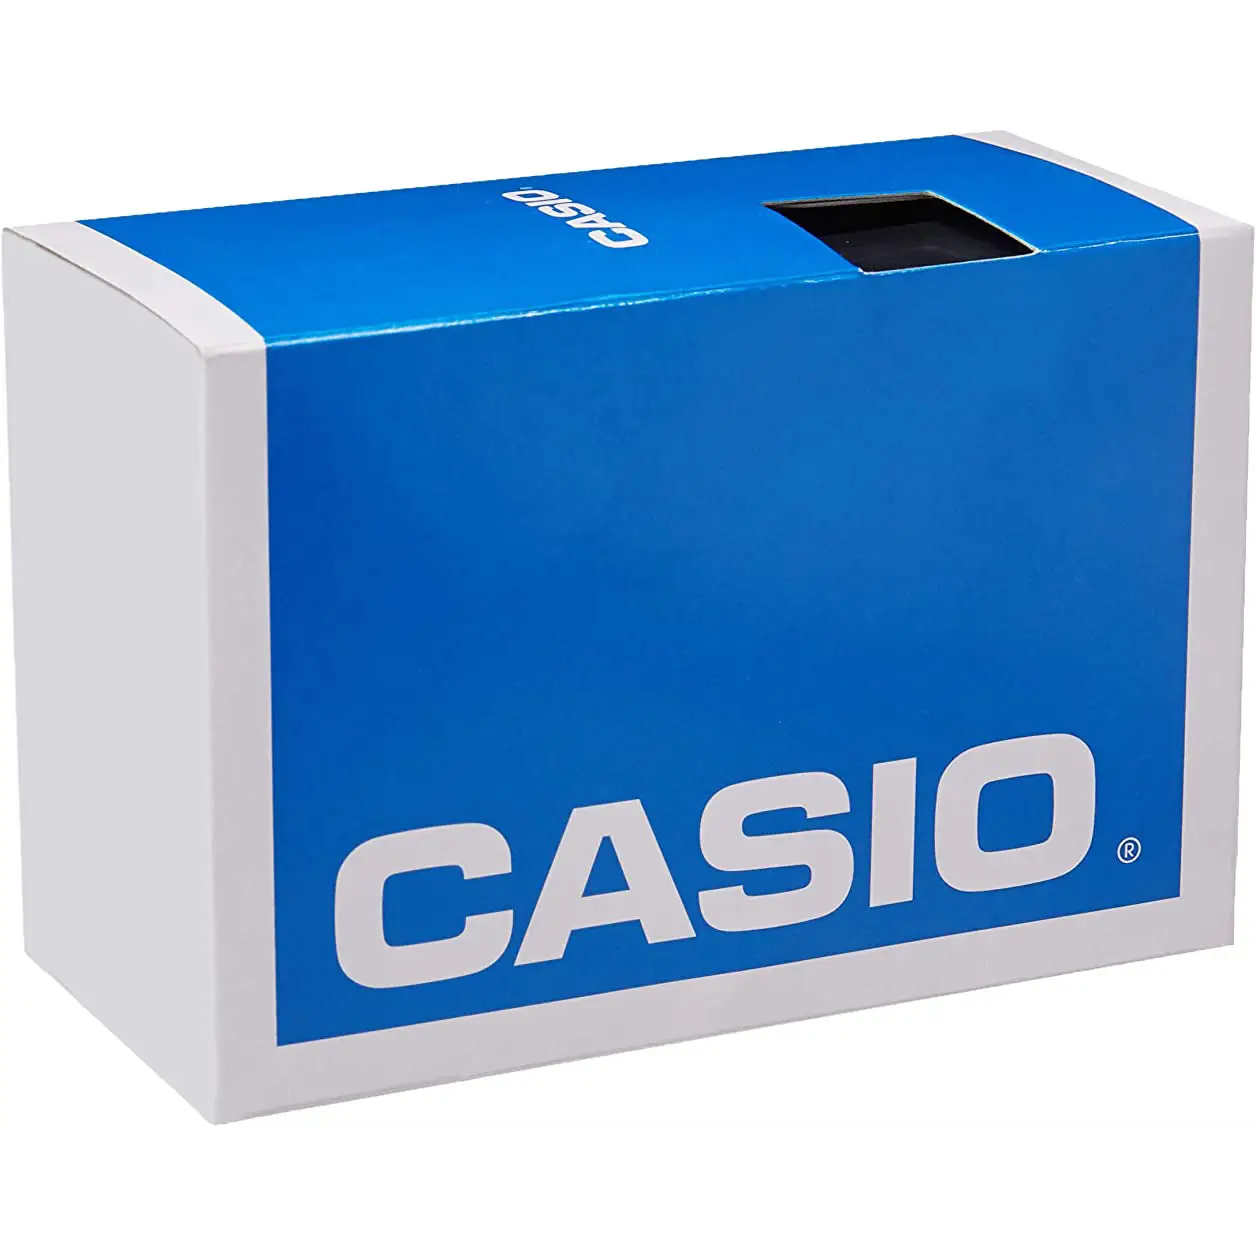 Casio Men’s Analog Quartz Black Dial Black Resin Watch